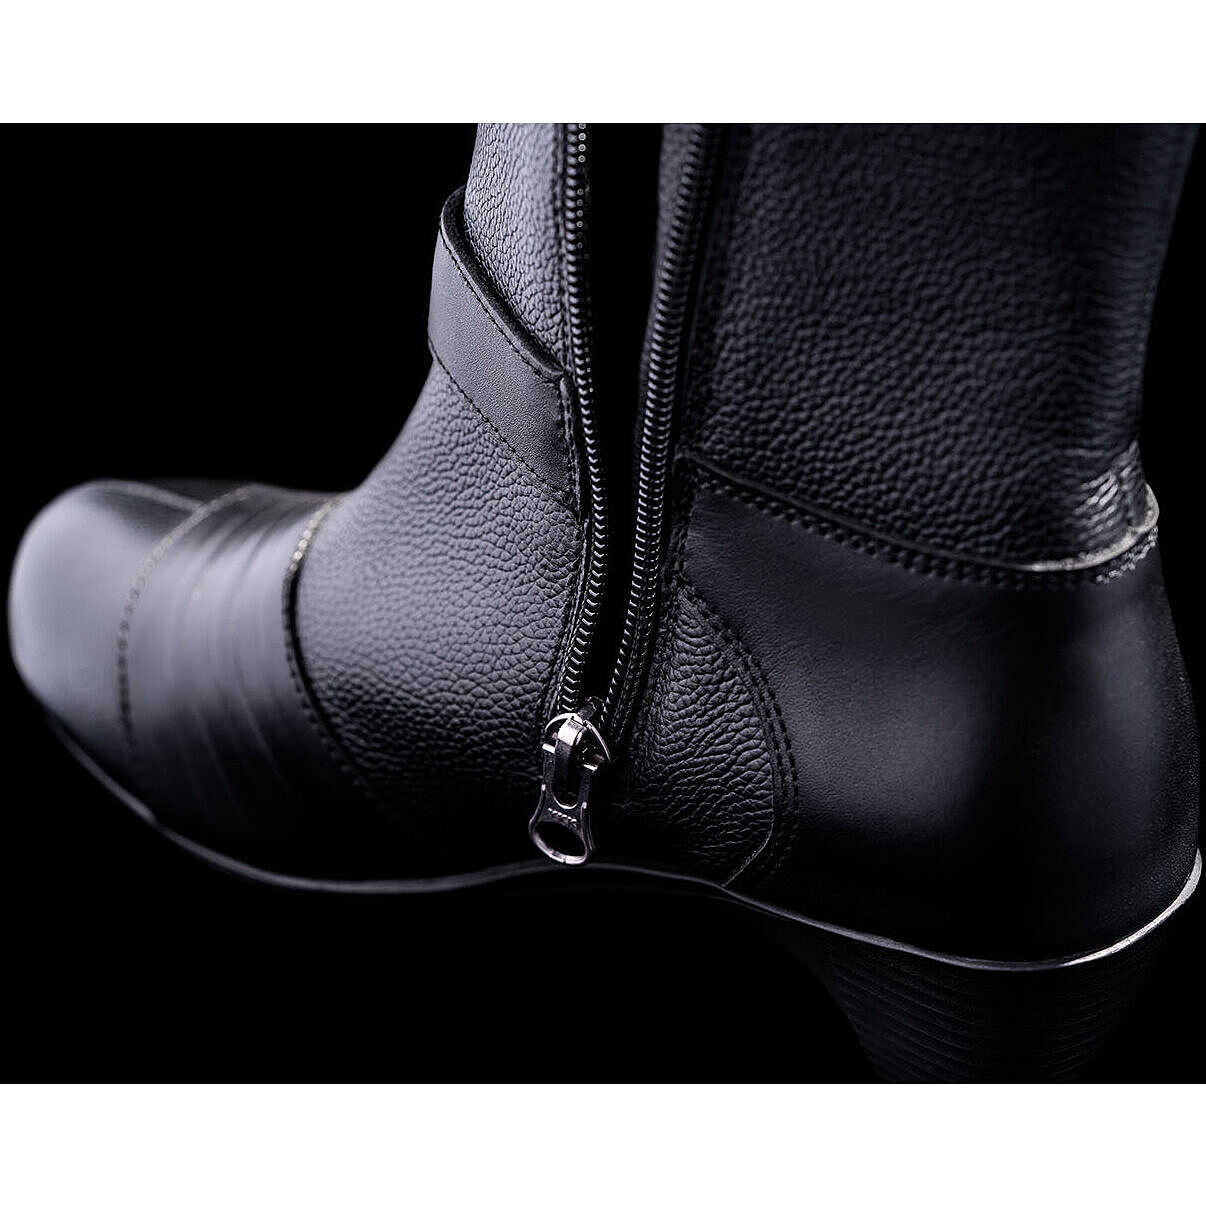 Celeris UK Bespoke Riding Boots | Womens riding boots, Horse boots, Horse riding  shoes